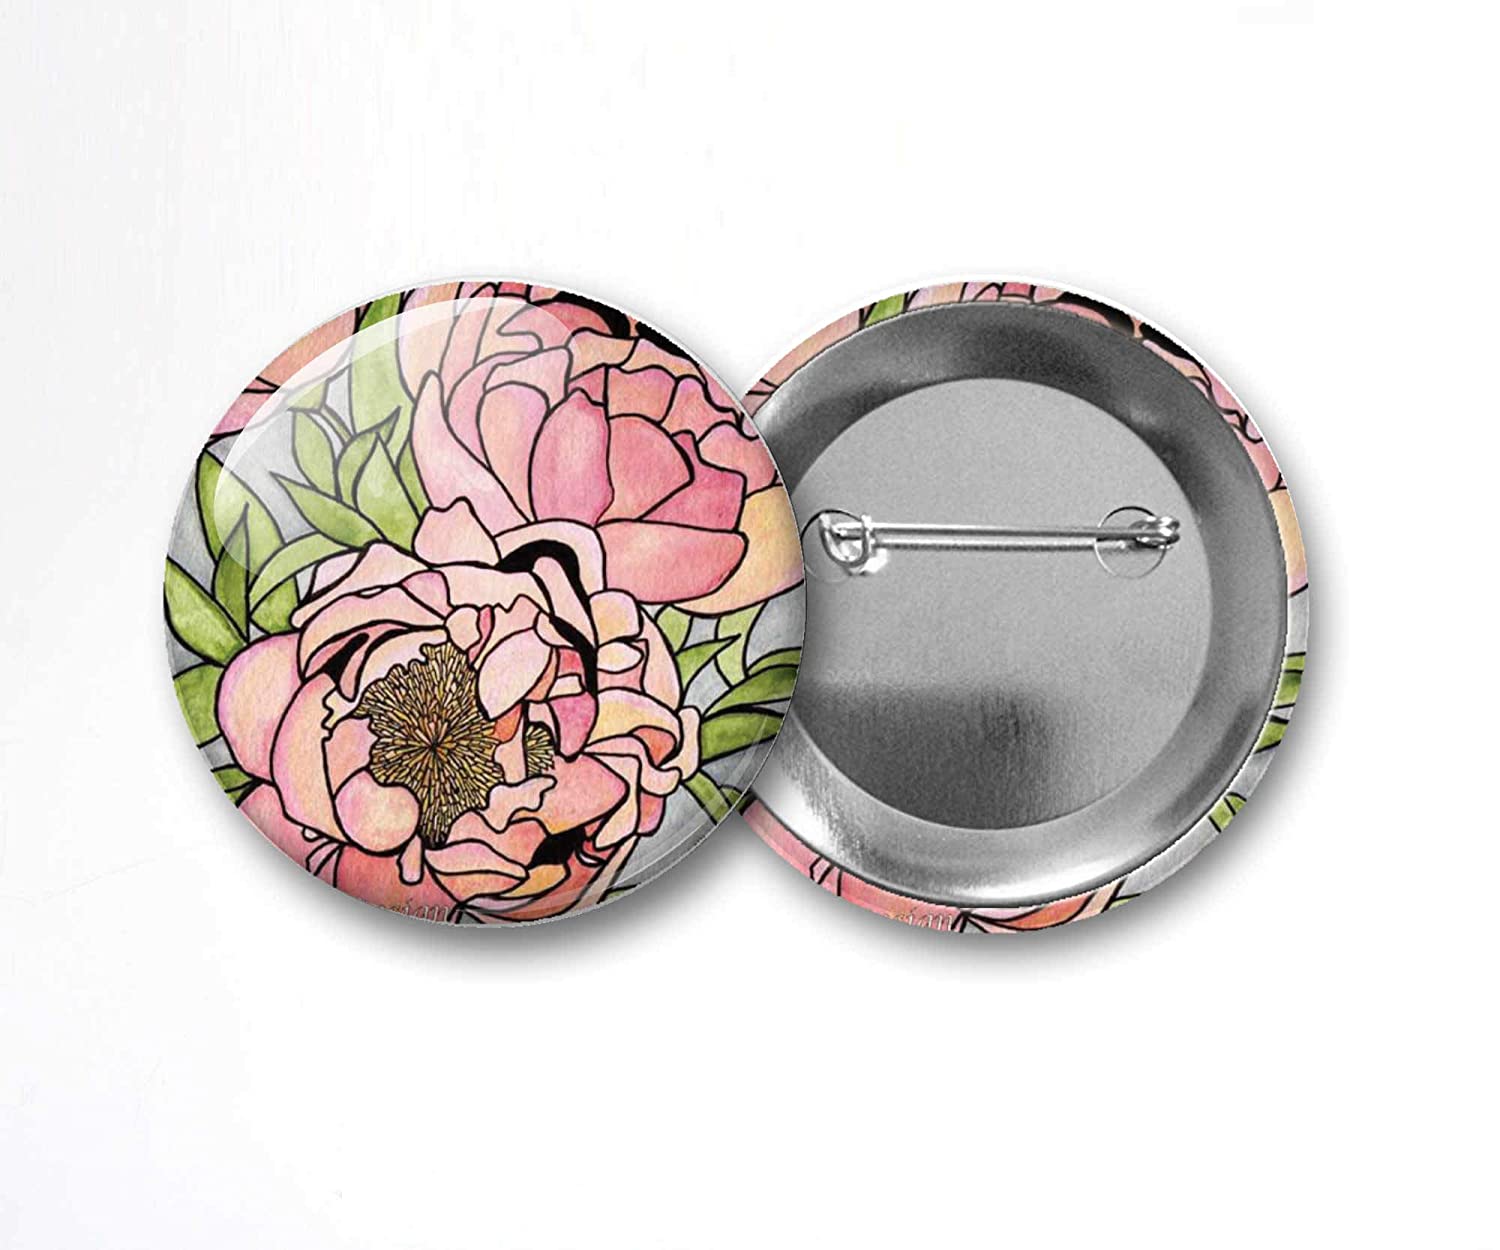 PinkPolish Design Buttons "Floral Carpet" Pin Back Art Button, 2.25"